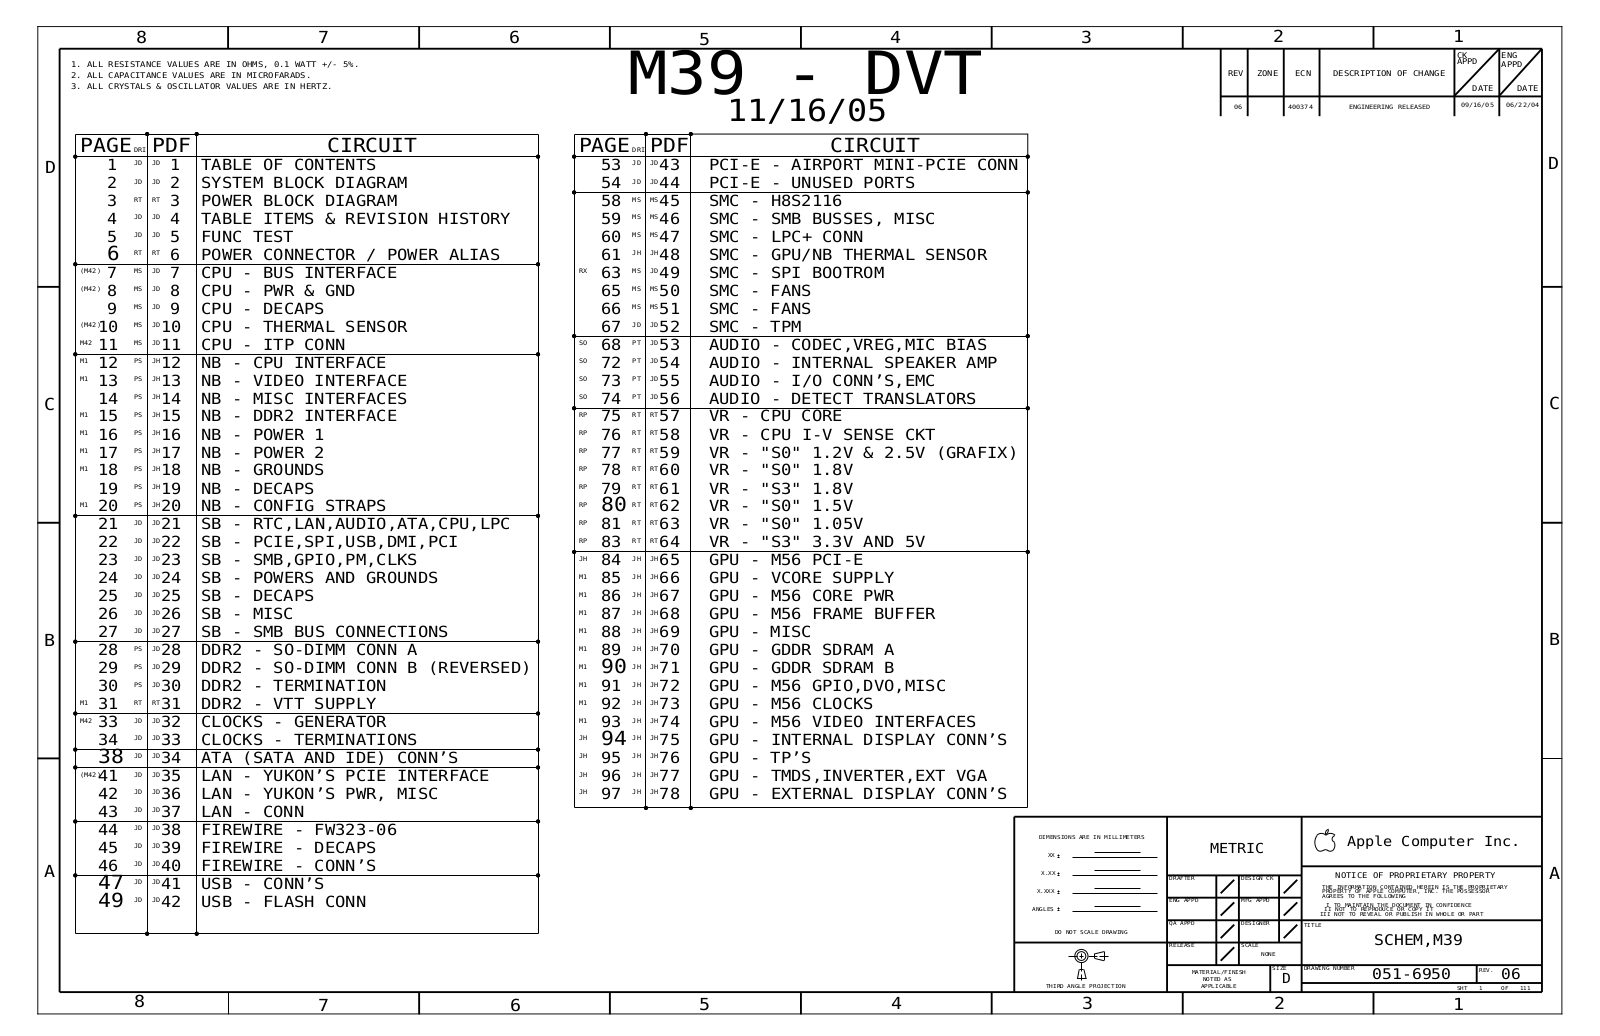 Apple iMAC G5 iSight M39-DVT 051-6950 16.11.2005 Rev06 Schematic